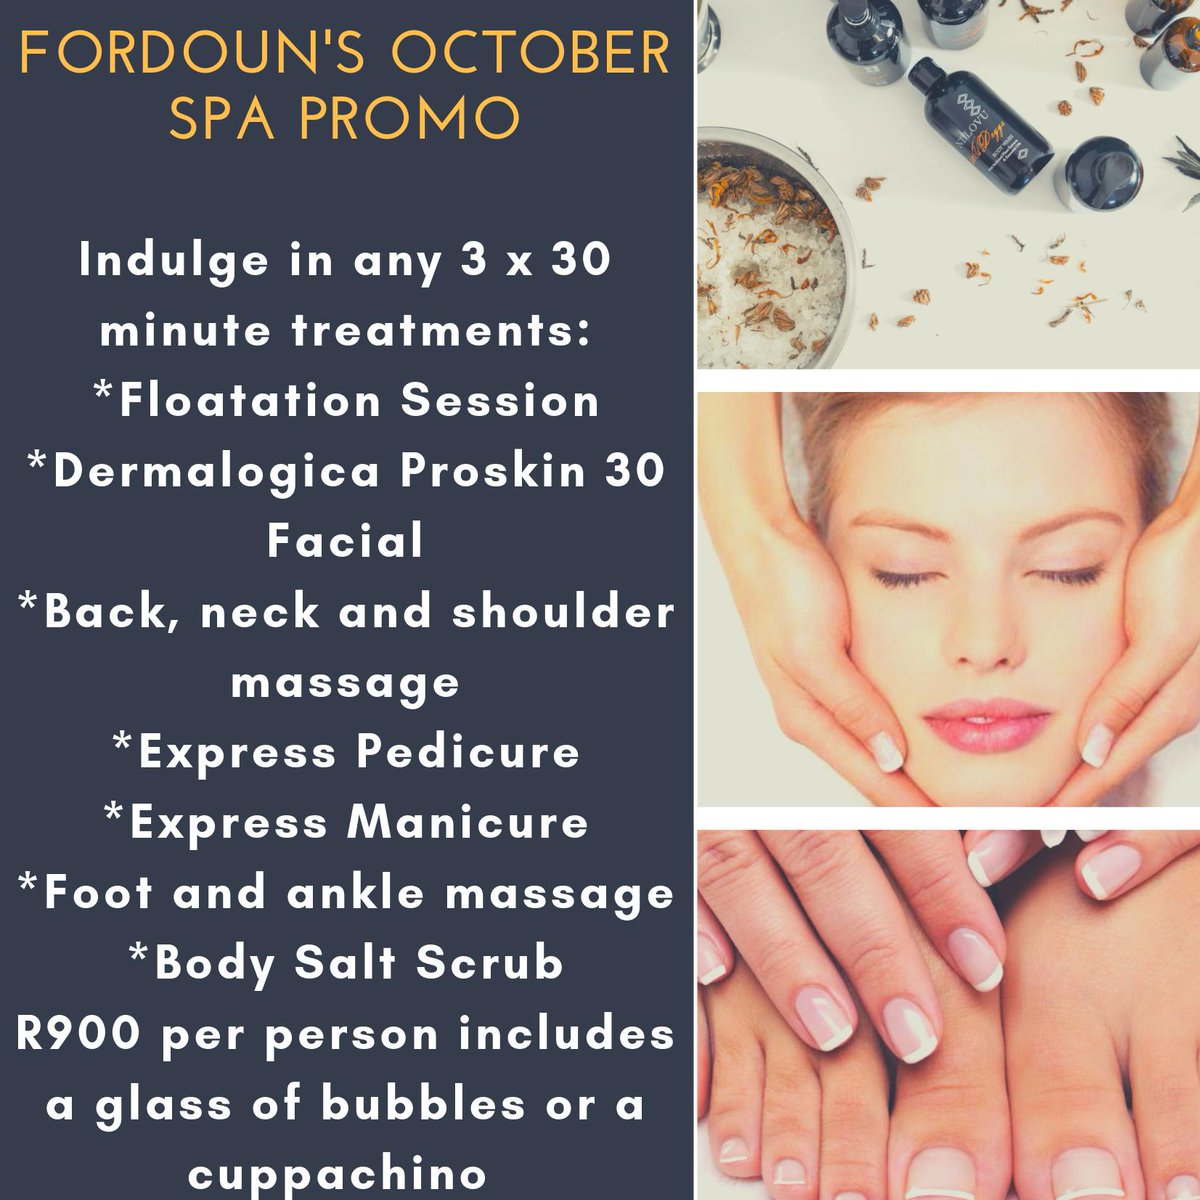 Fordoun's October Spa promo is a must!

fordoun.com/spa-booking/

#midlandsspa #dayspa #pamper #massage #spa #midlandsmeander #kznmidlands